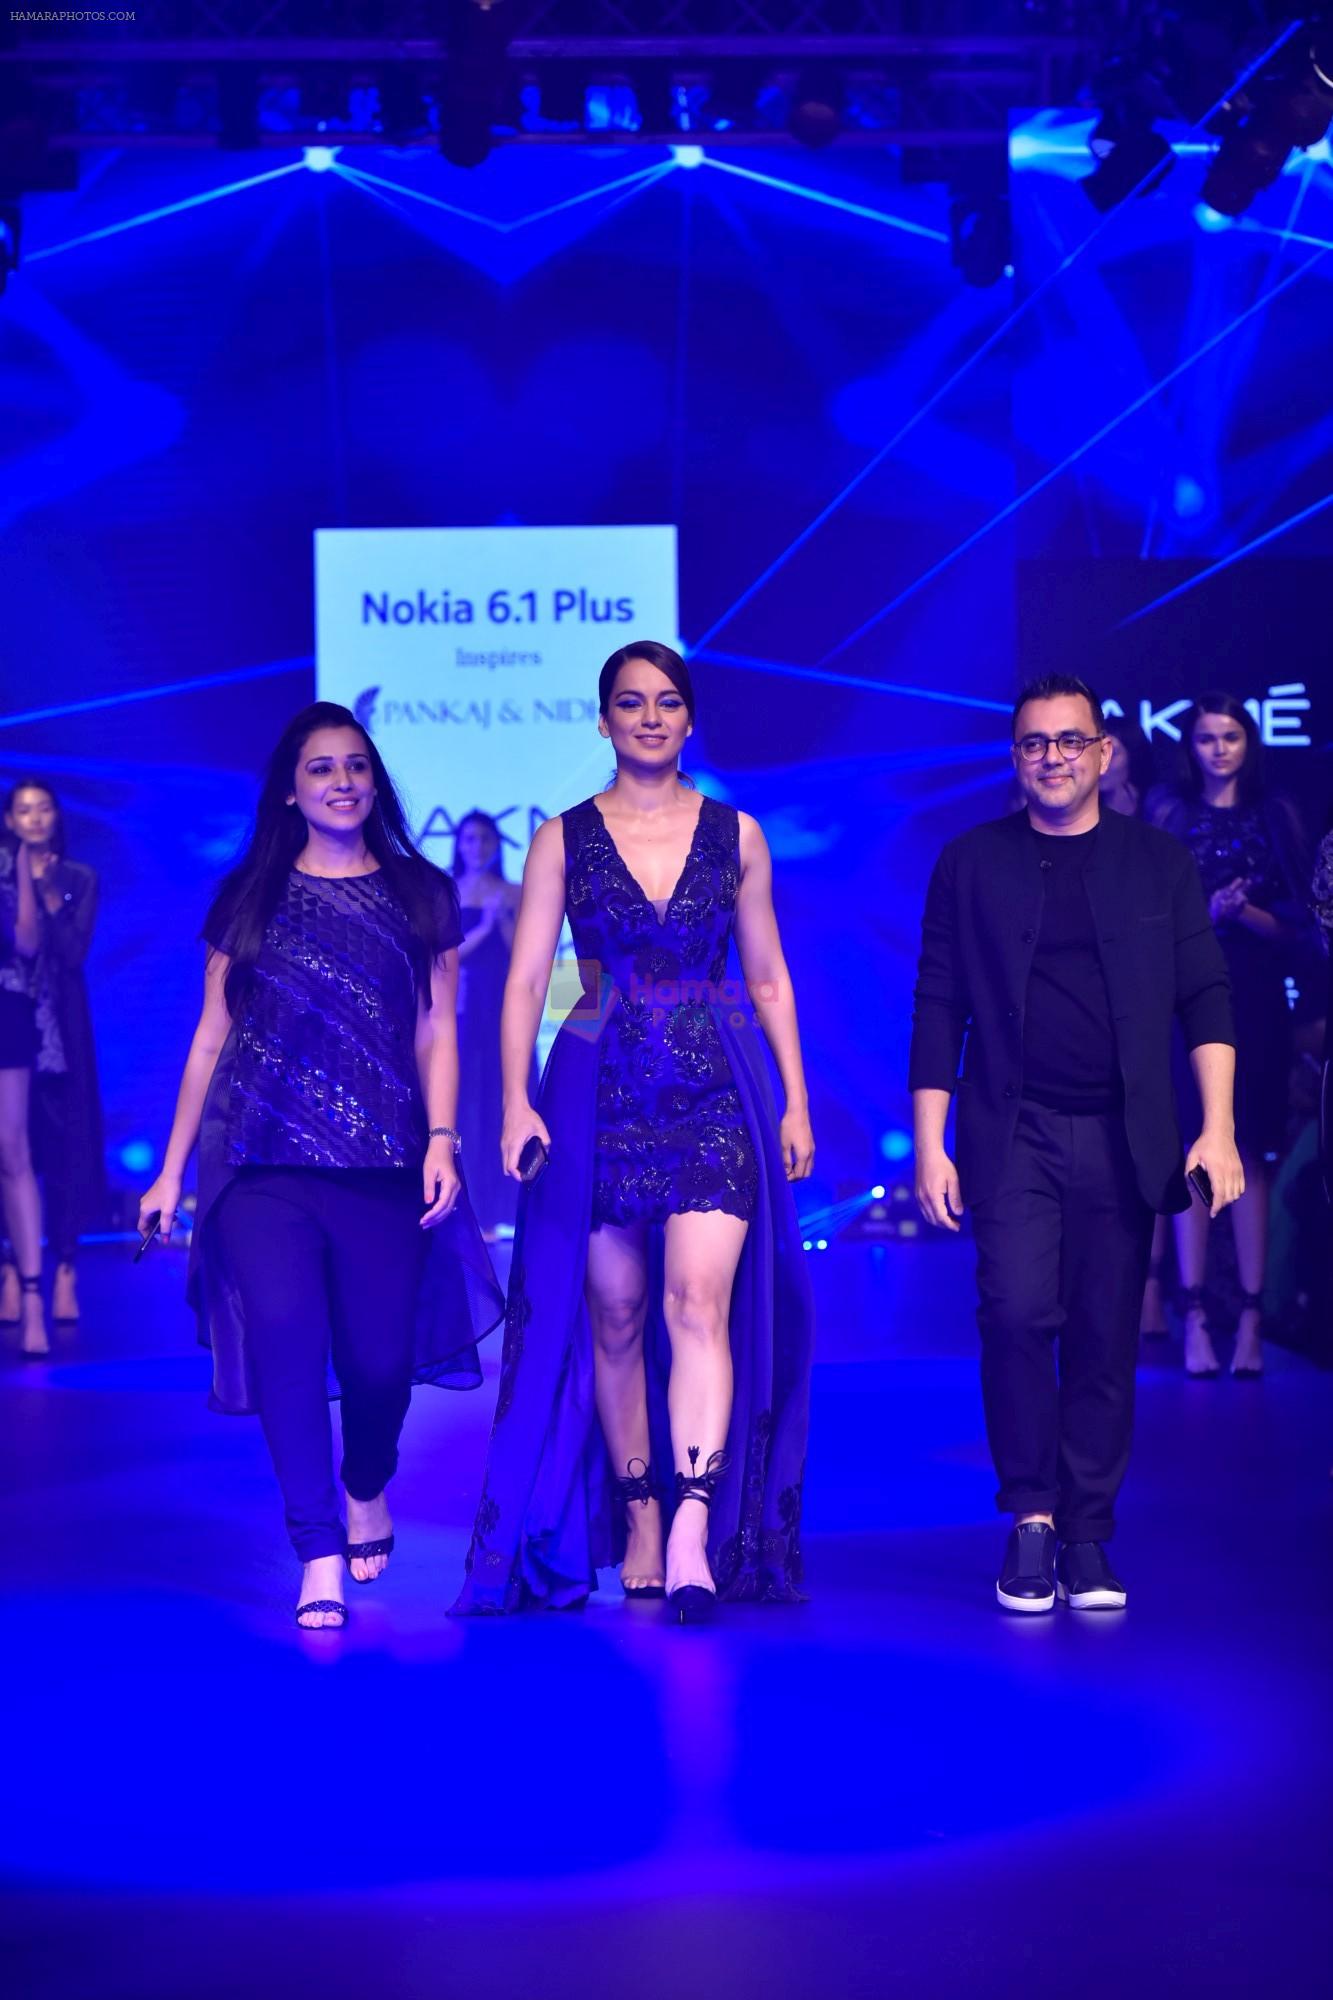 Kangana Ranaut at Pankaj and Nidhi Show at Lakme Fashion Week on 26th Aug 2018